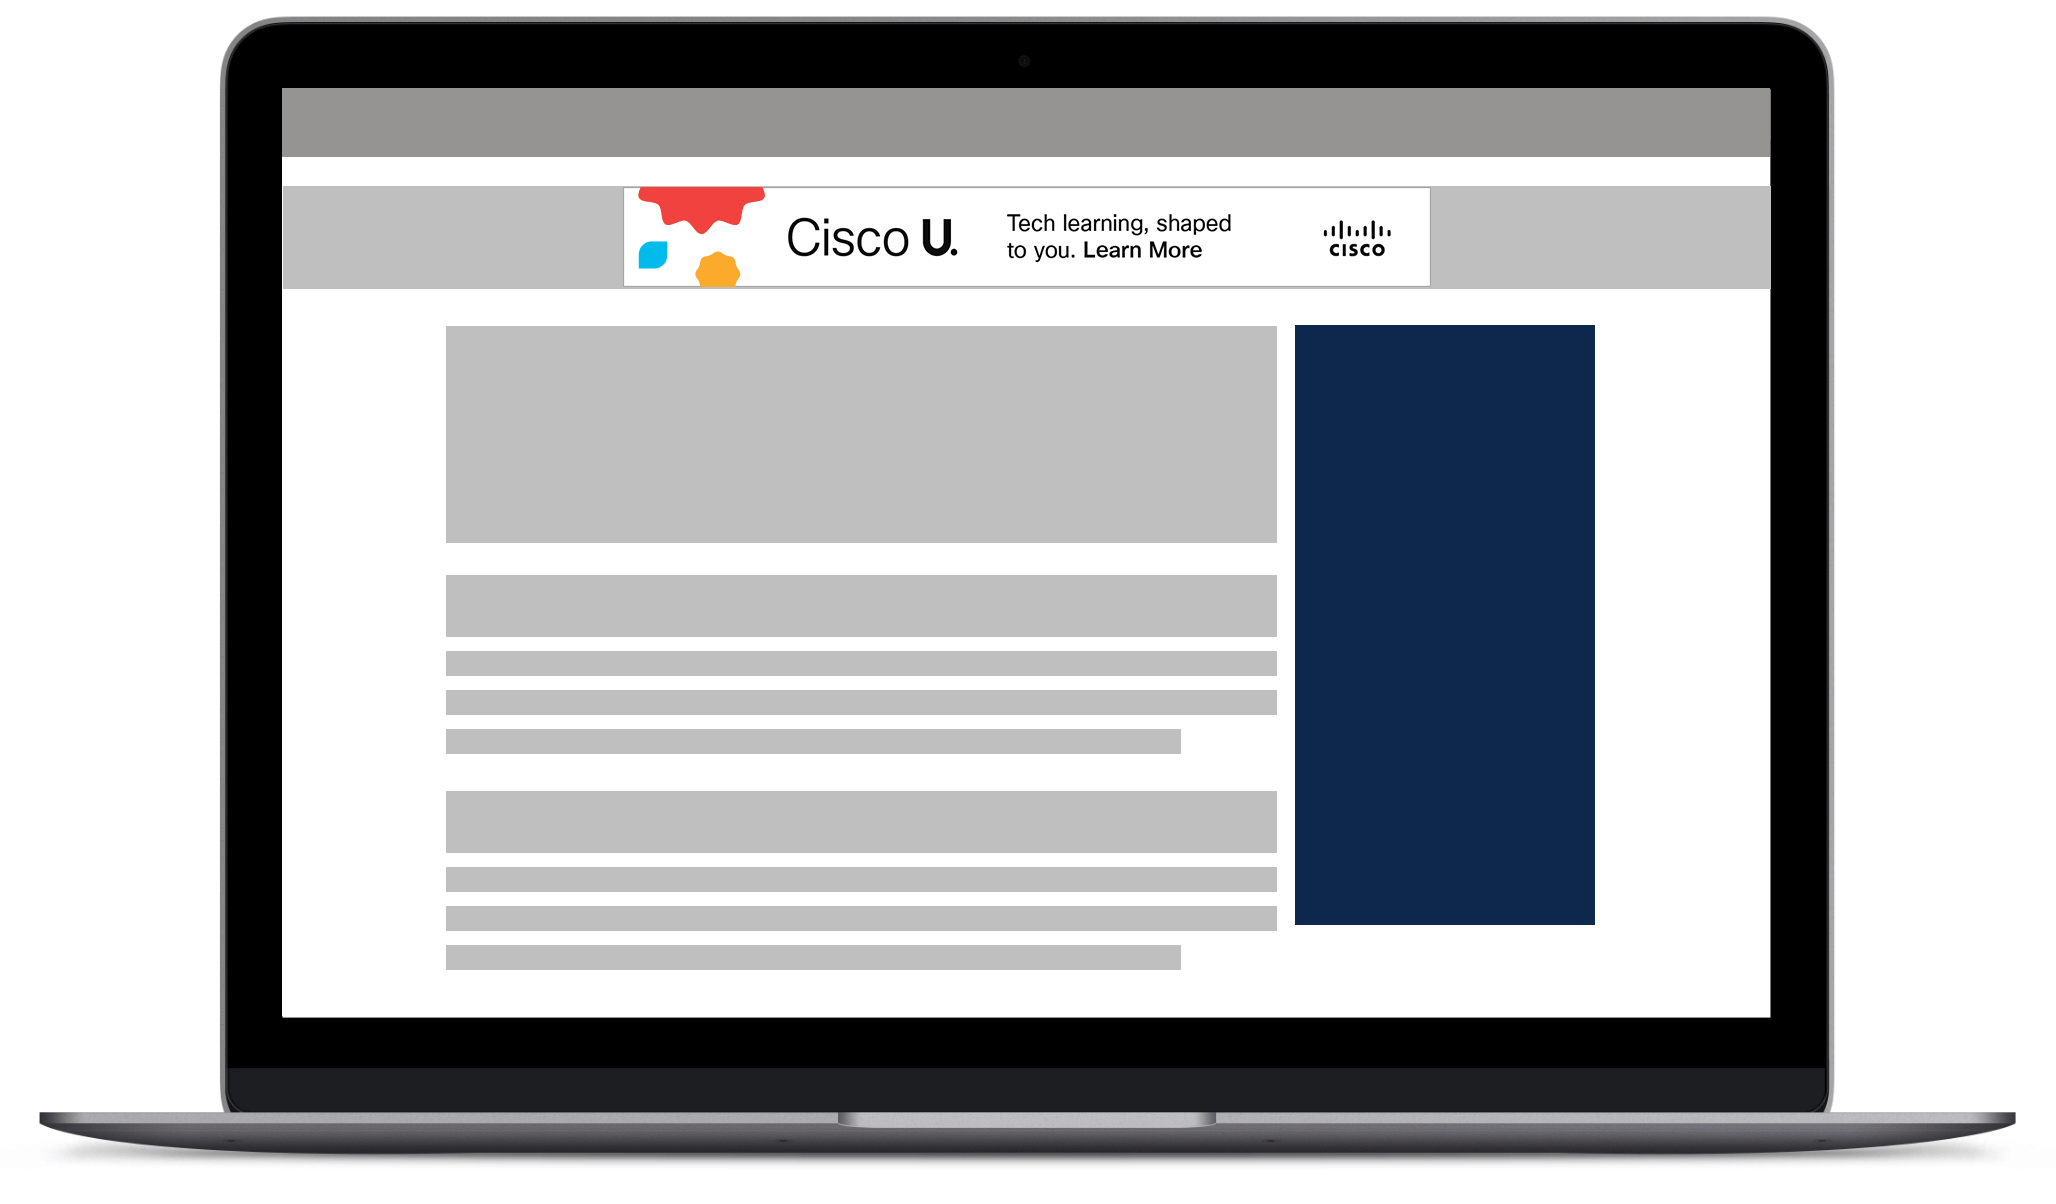 Cisco U. Campaign